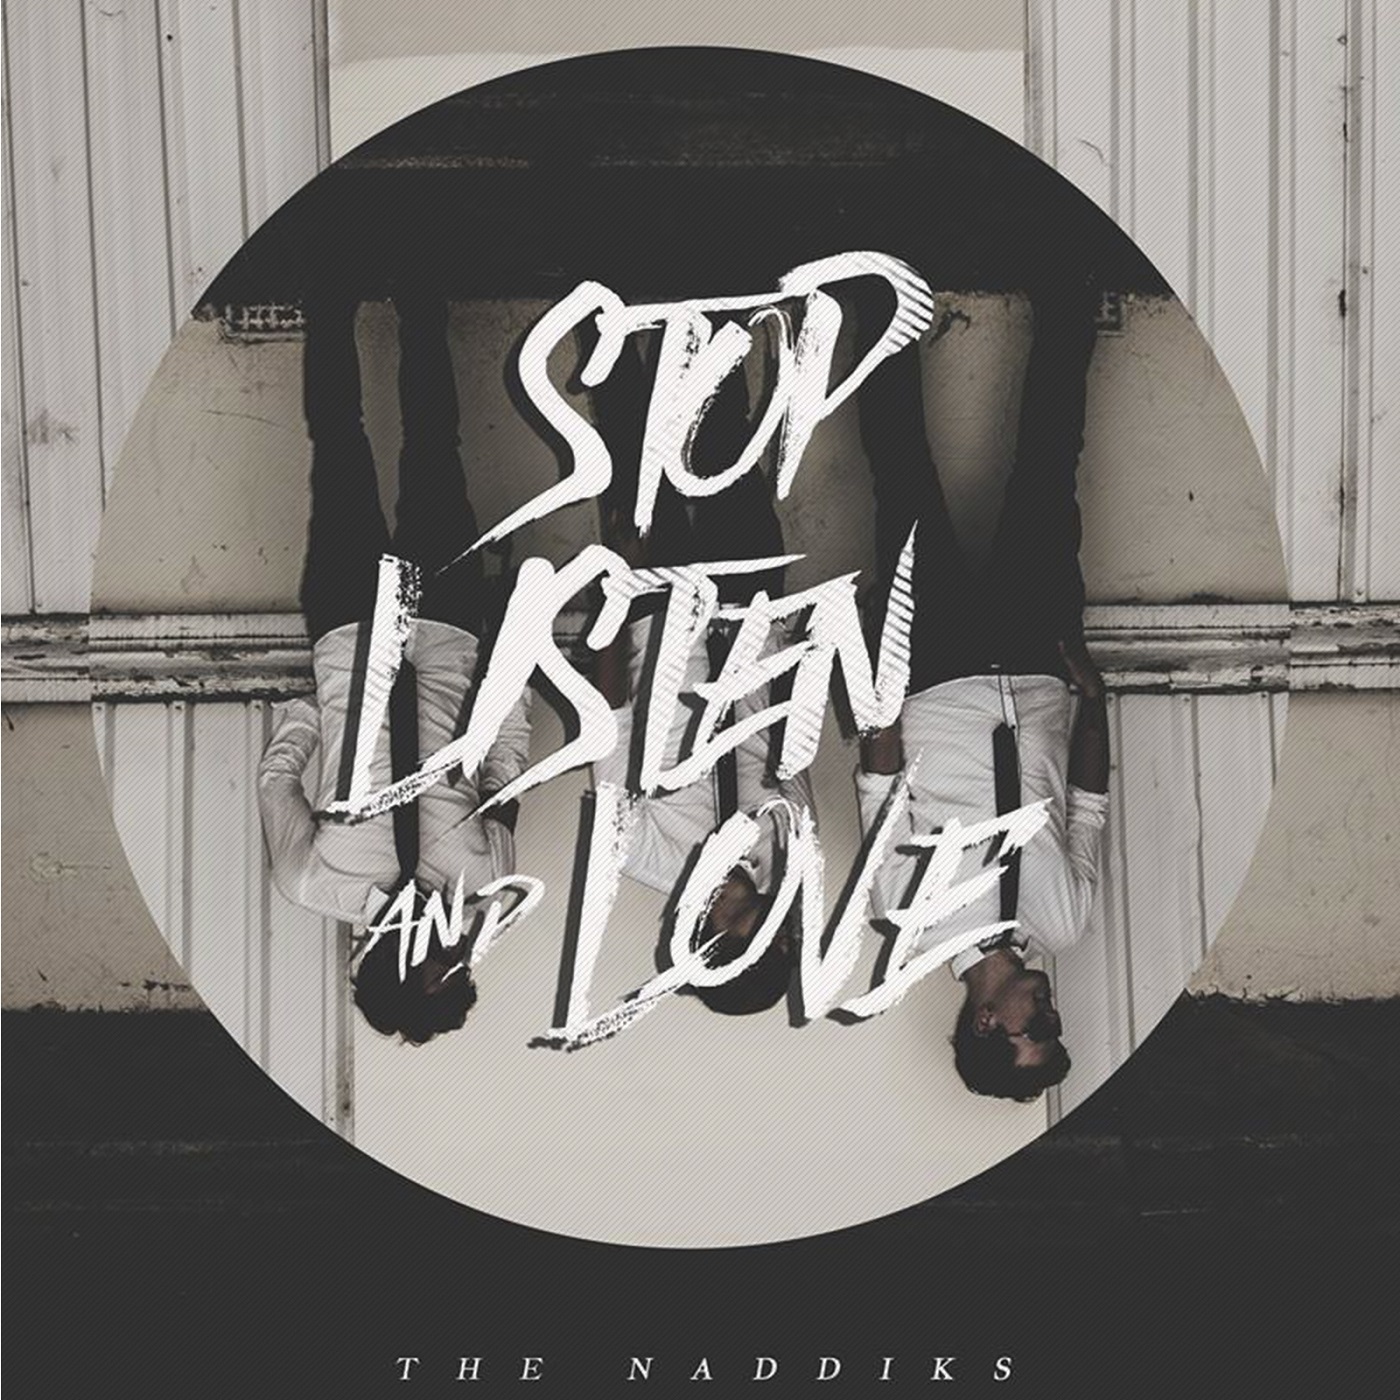  The Naddiks – “Heart Of Fire”/”Stop.Listen&Love”